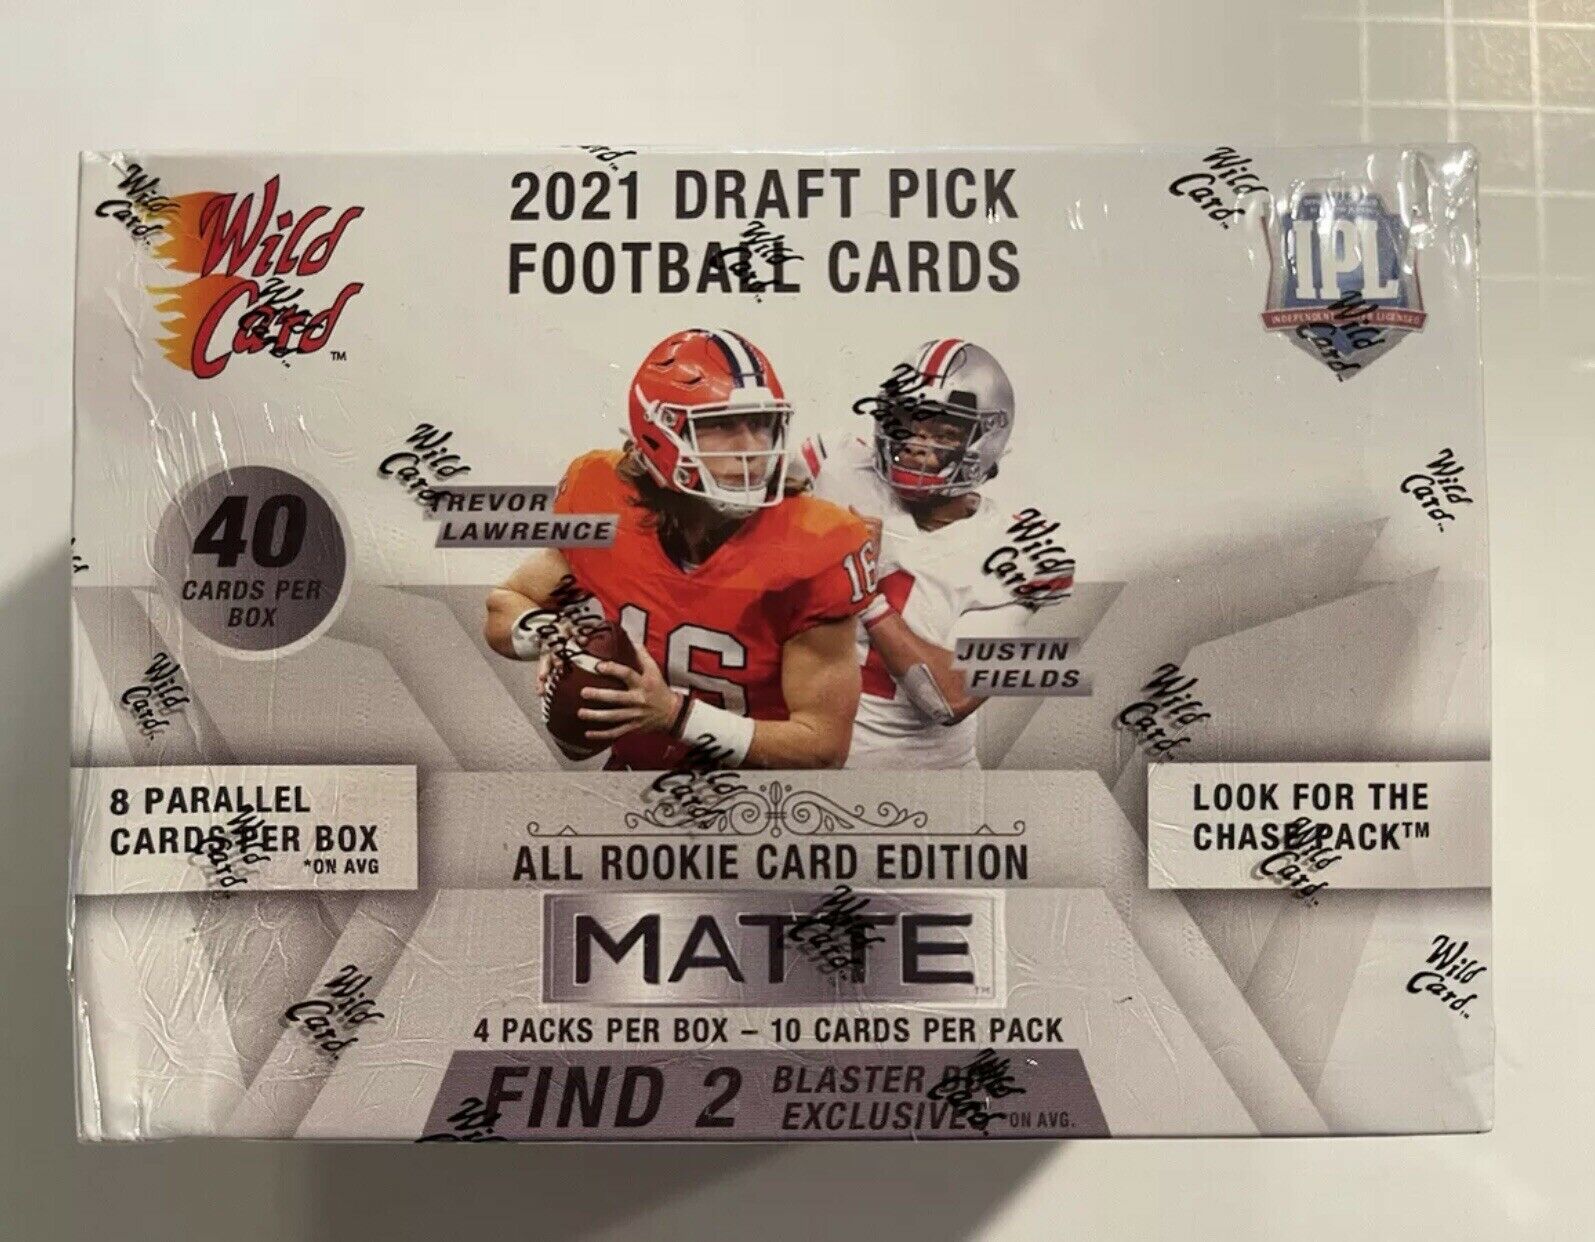 OUT OF STOCK - - 2021 WILD CARD Matte NFL Football Draft Picks WHITE Blaster Box